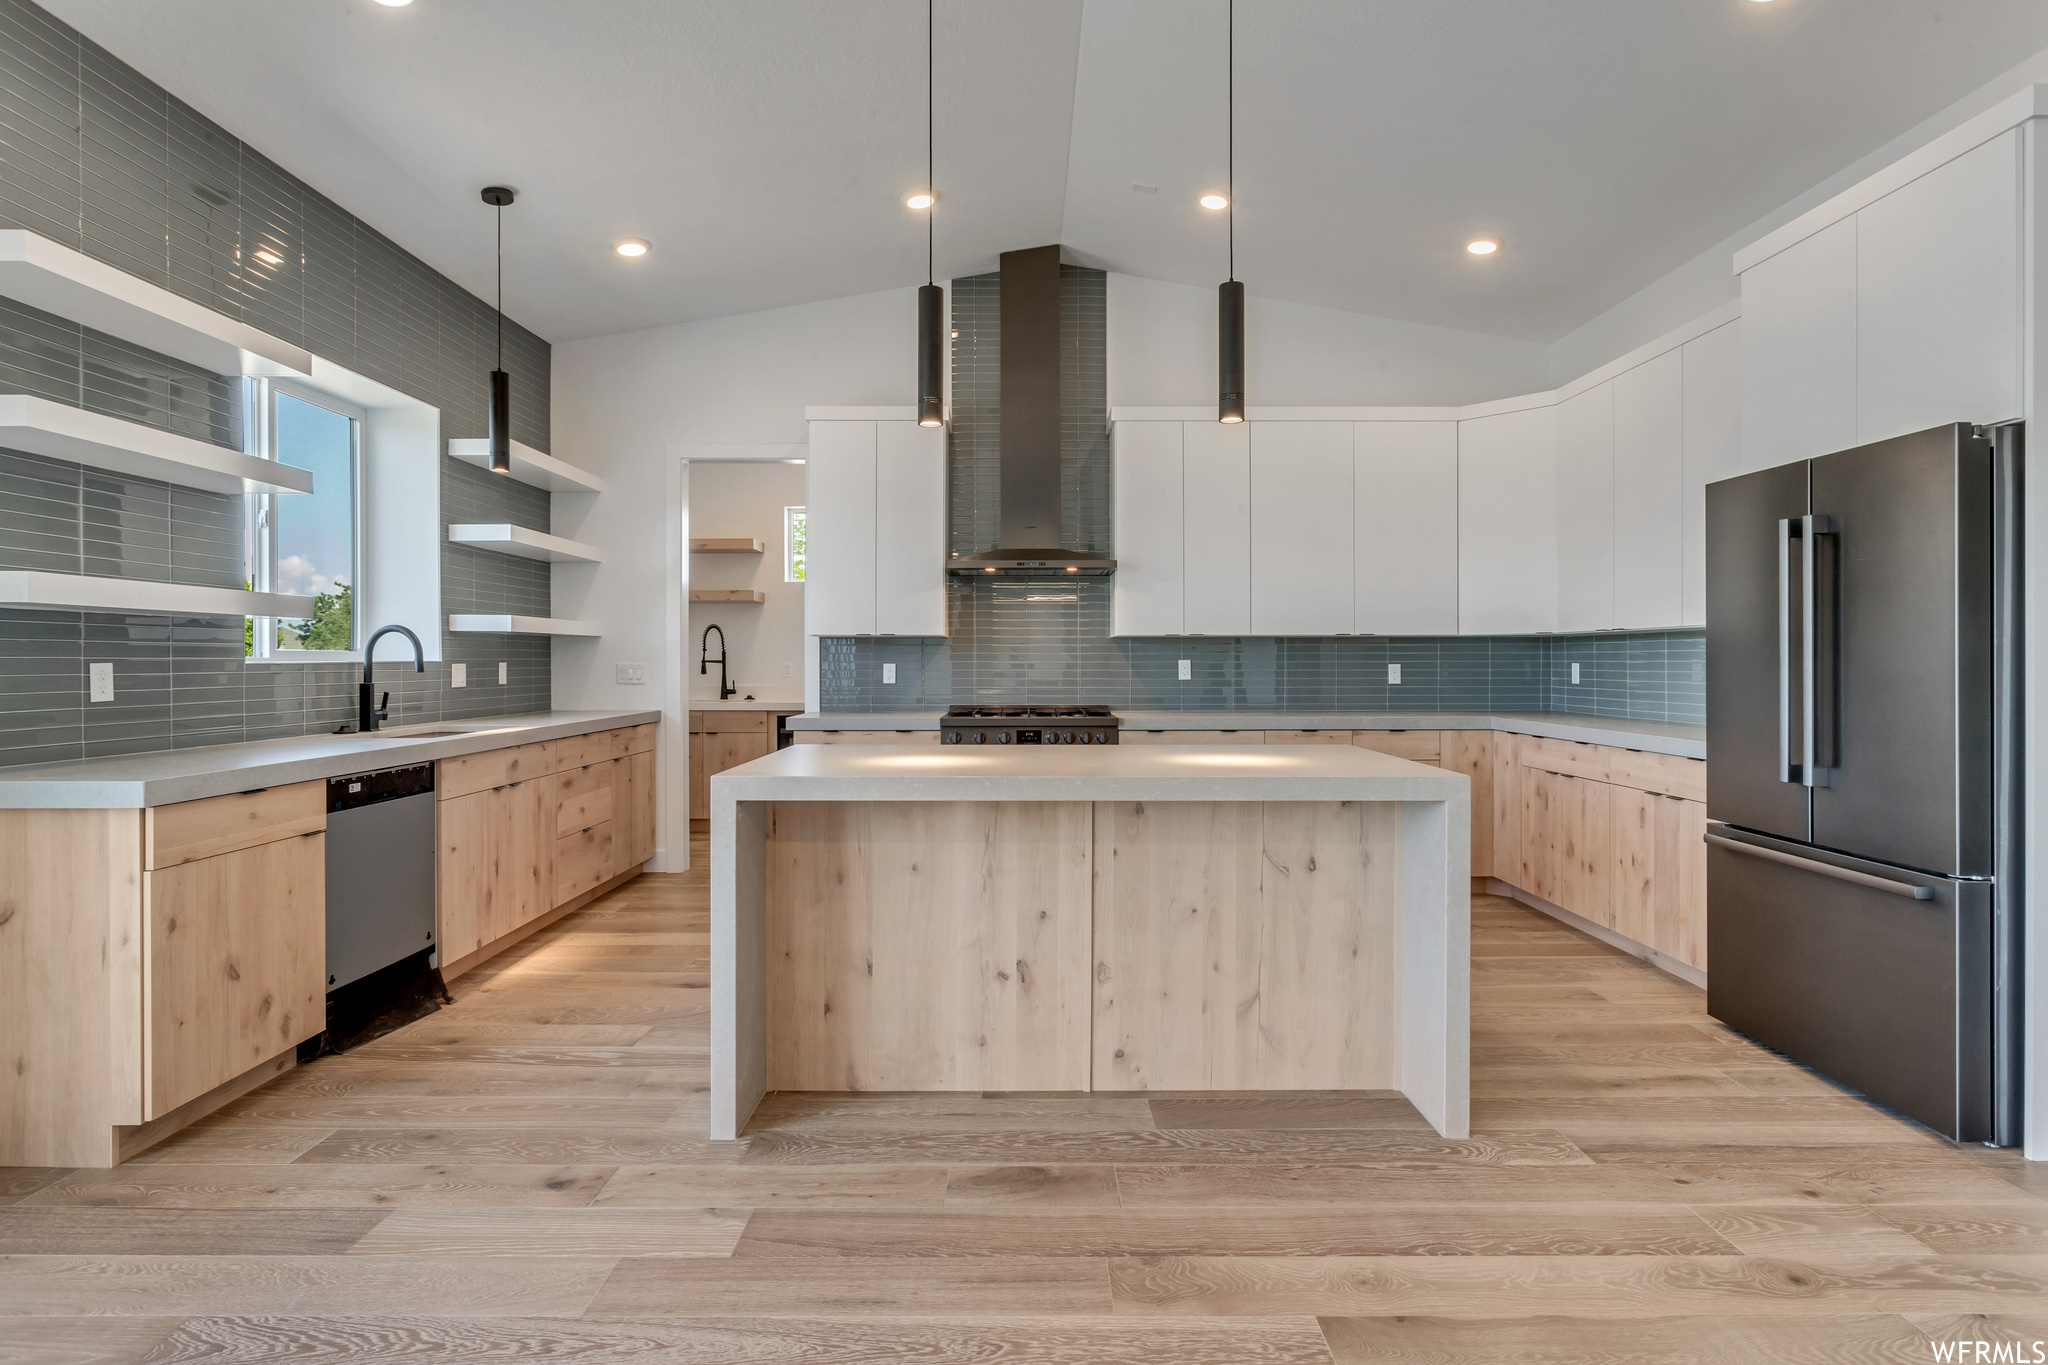 The backsplash tile and dark stainless appliances make this kitchen unique